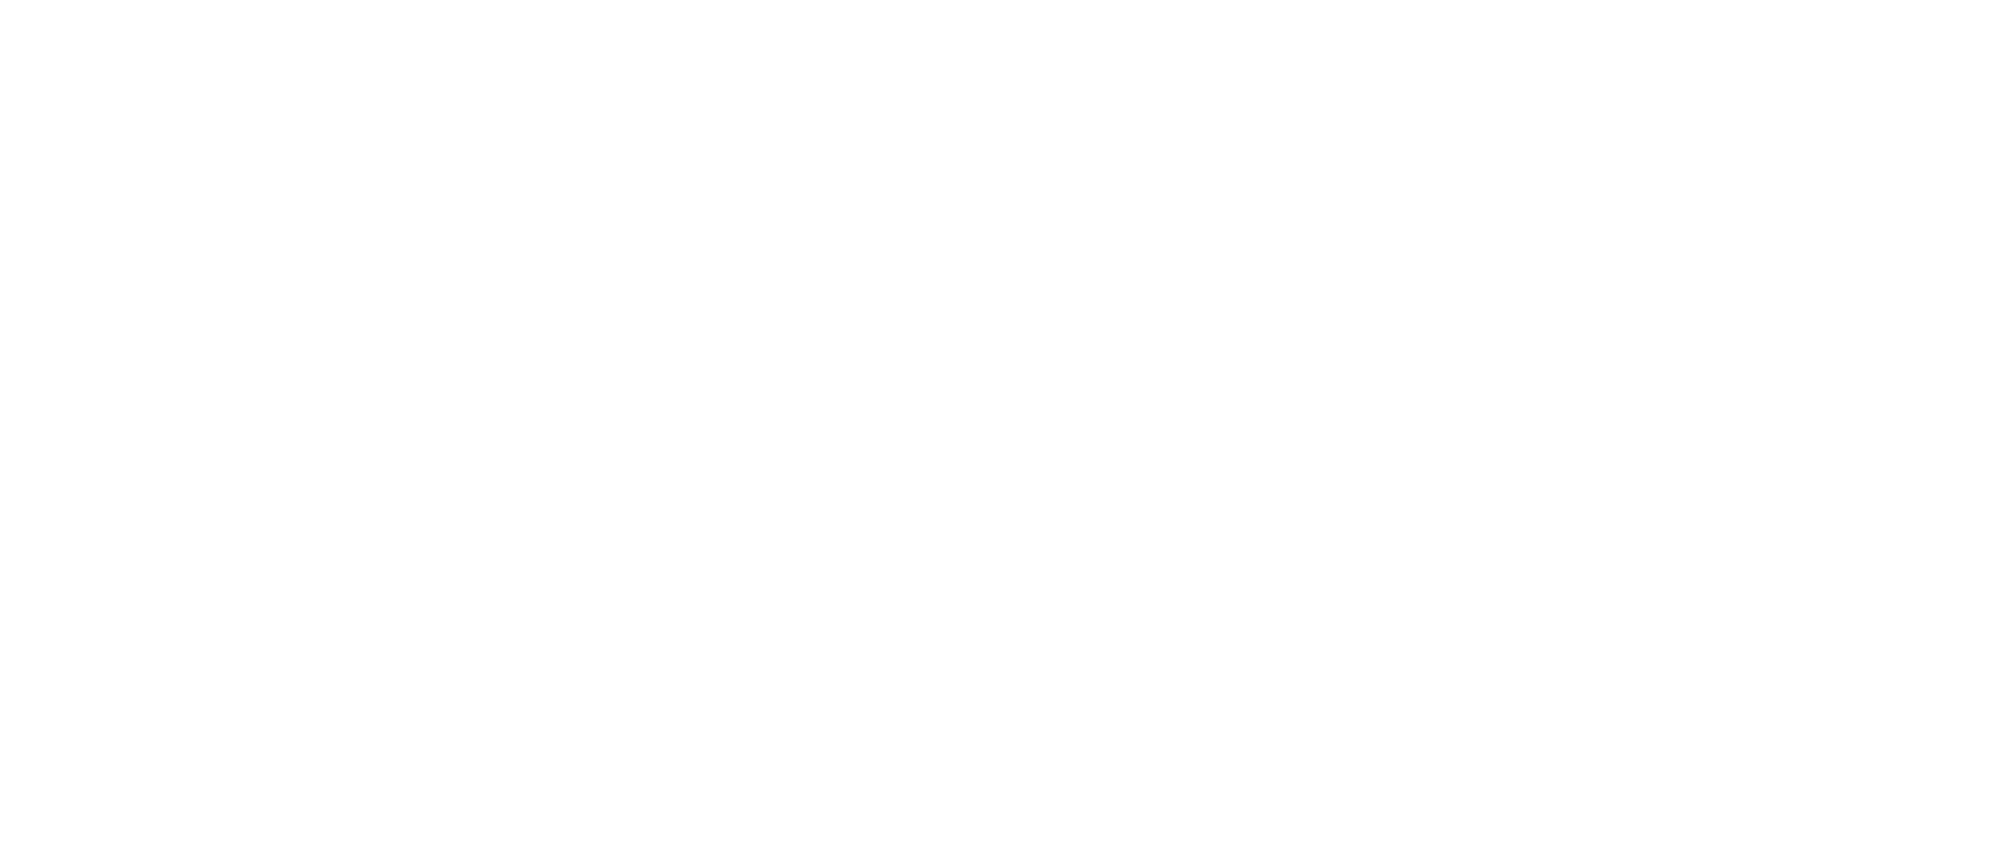 Juan Ulloa – Strategic Communications Pro